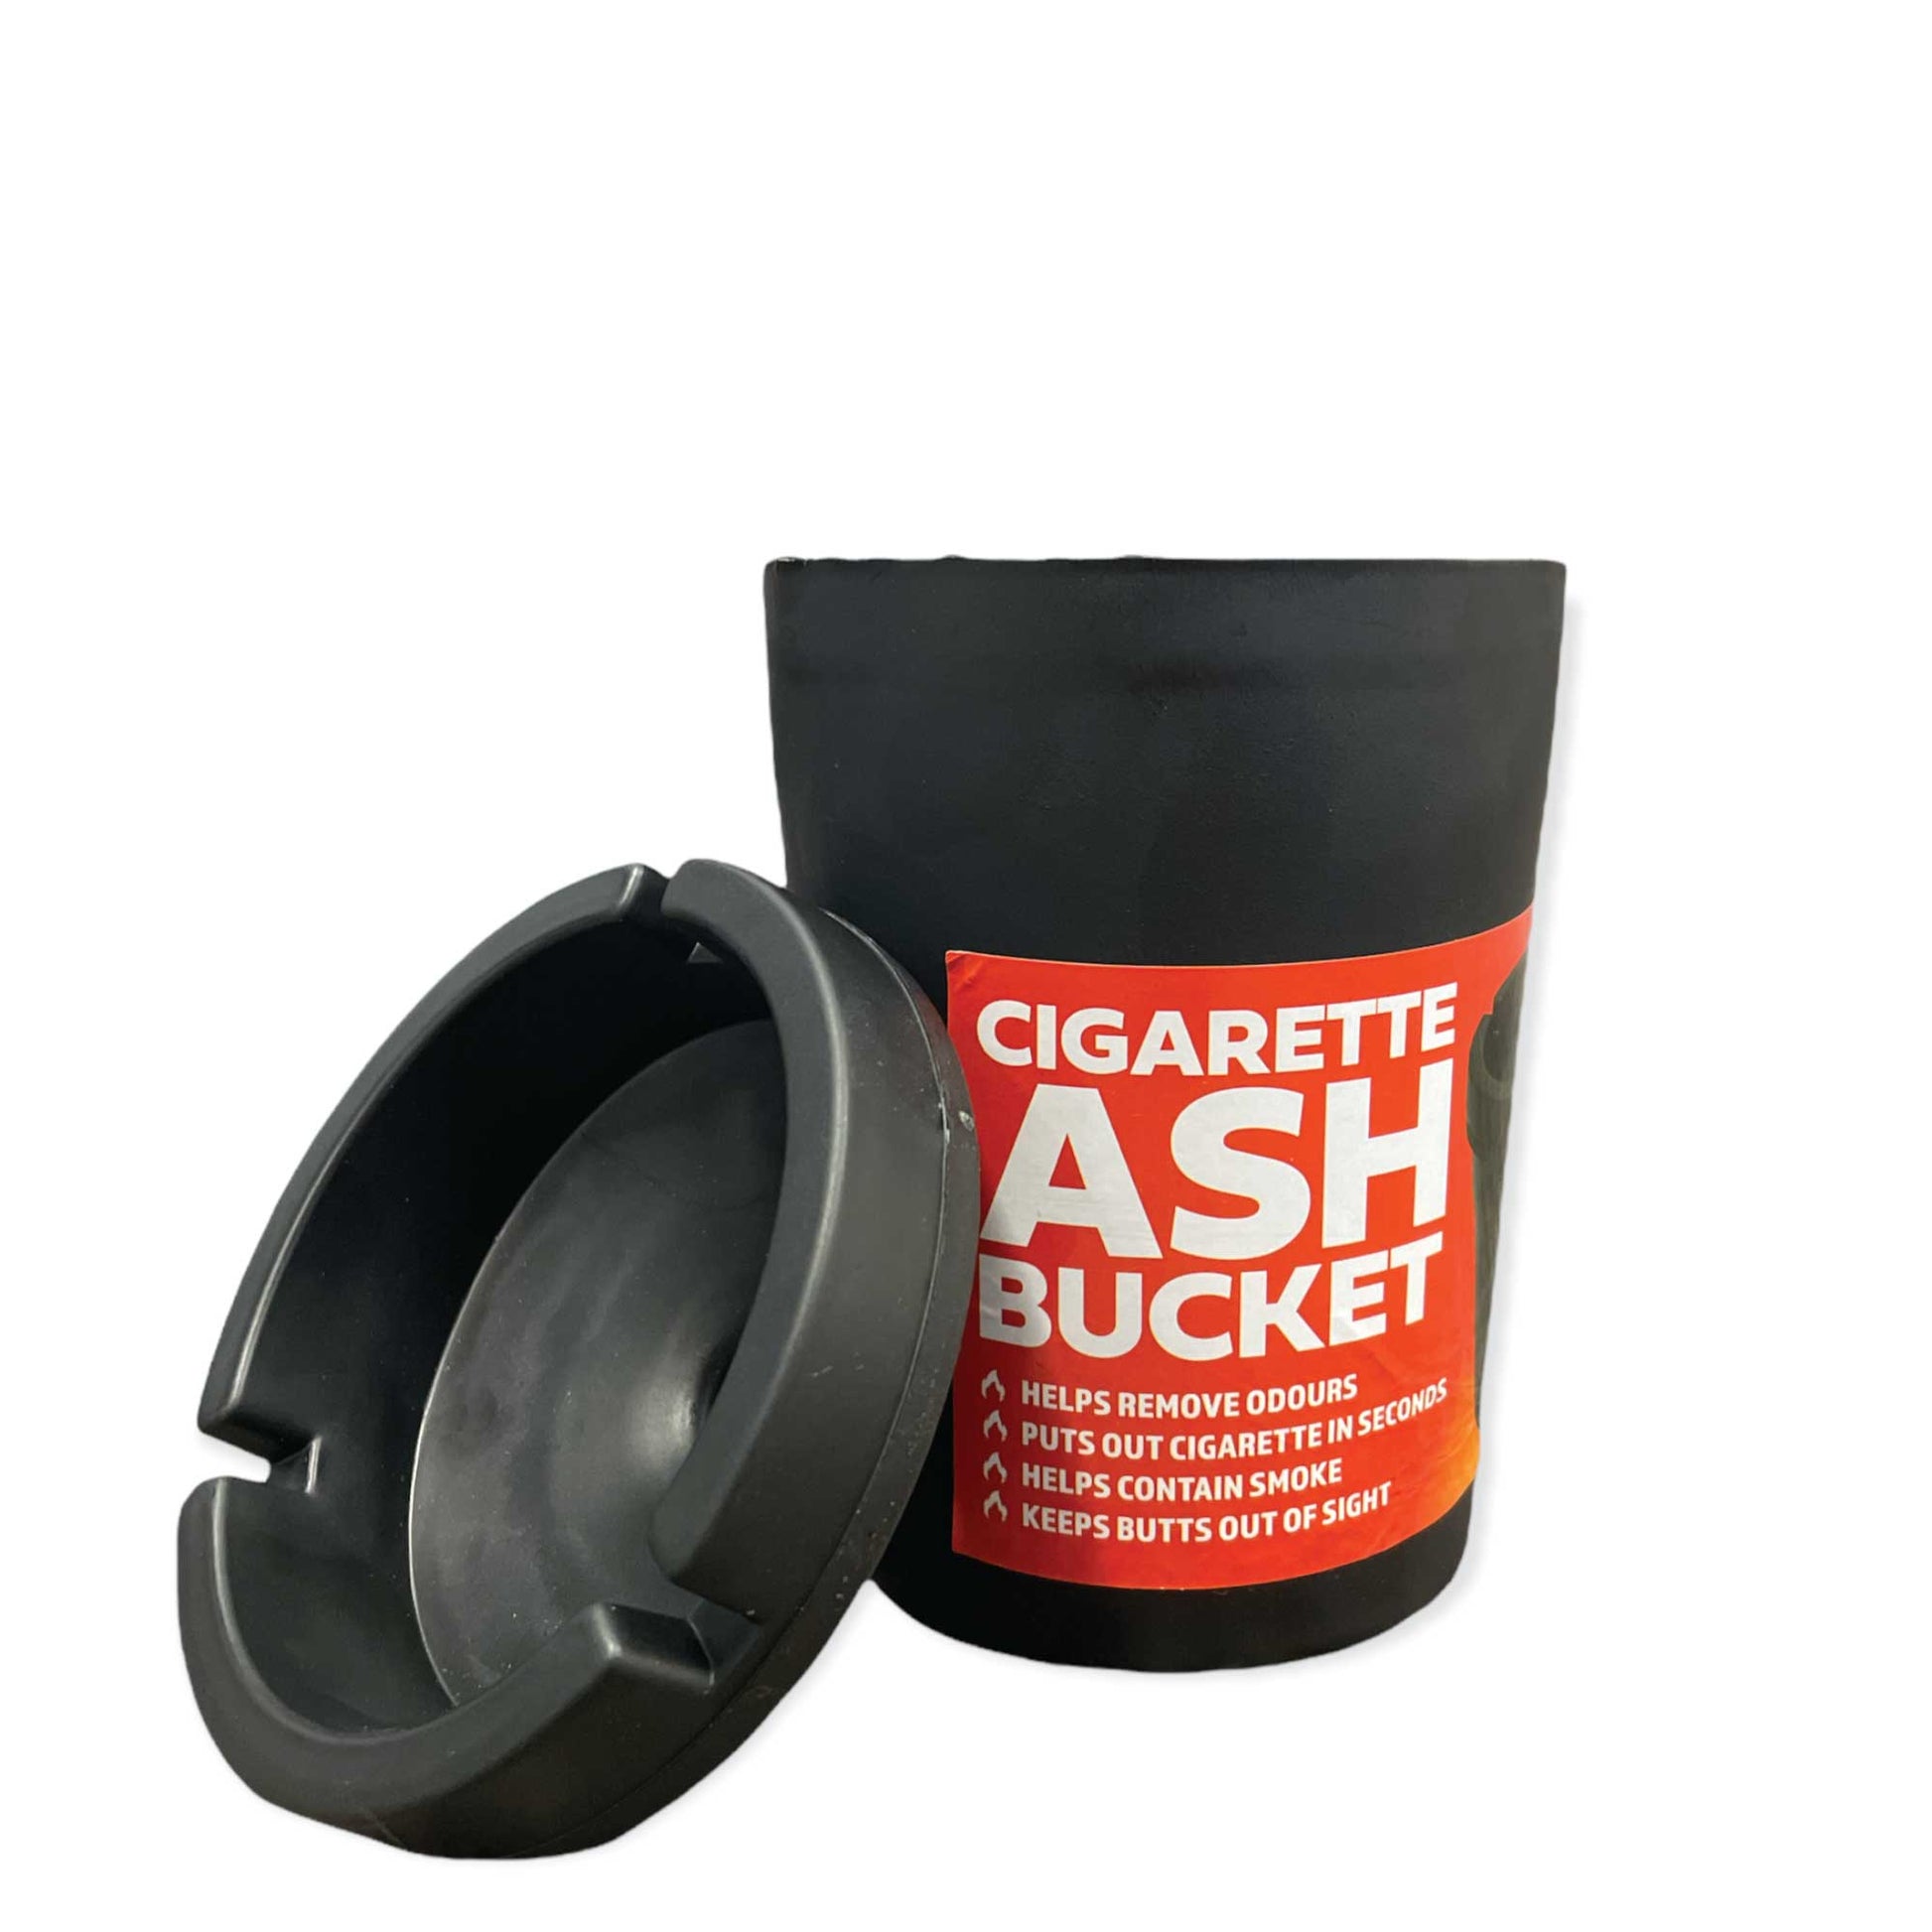 12 Pk Cigarette Ashtray Bucket Black with Lid Large Tobacco Ash Smoke Car Holder